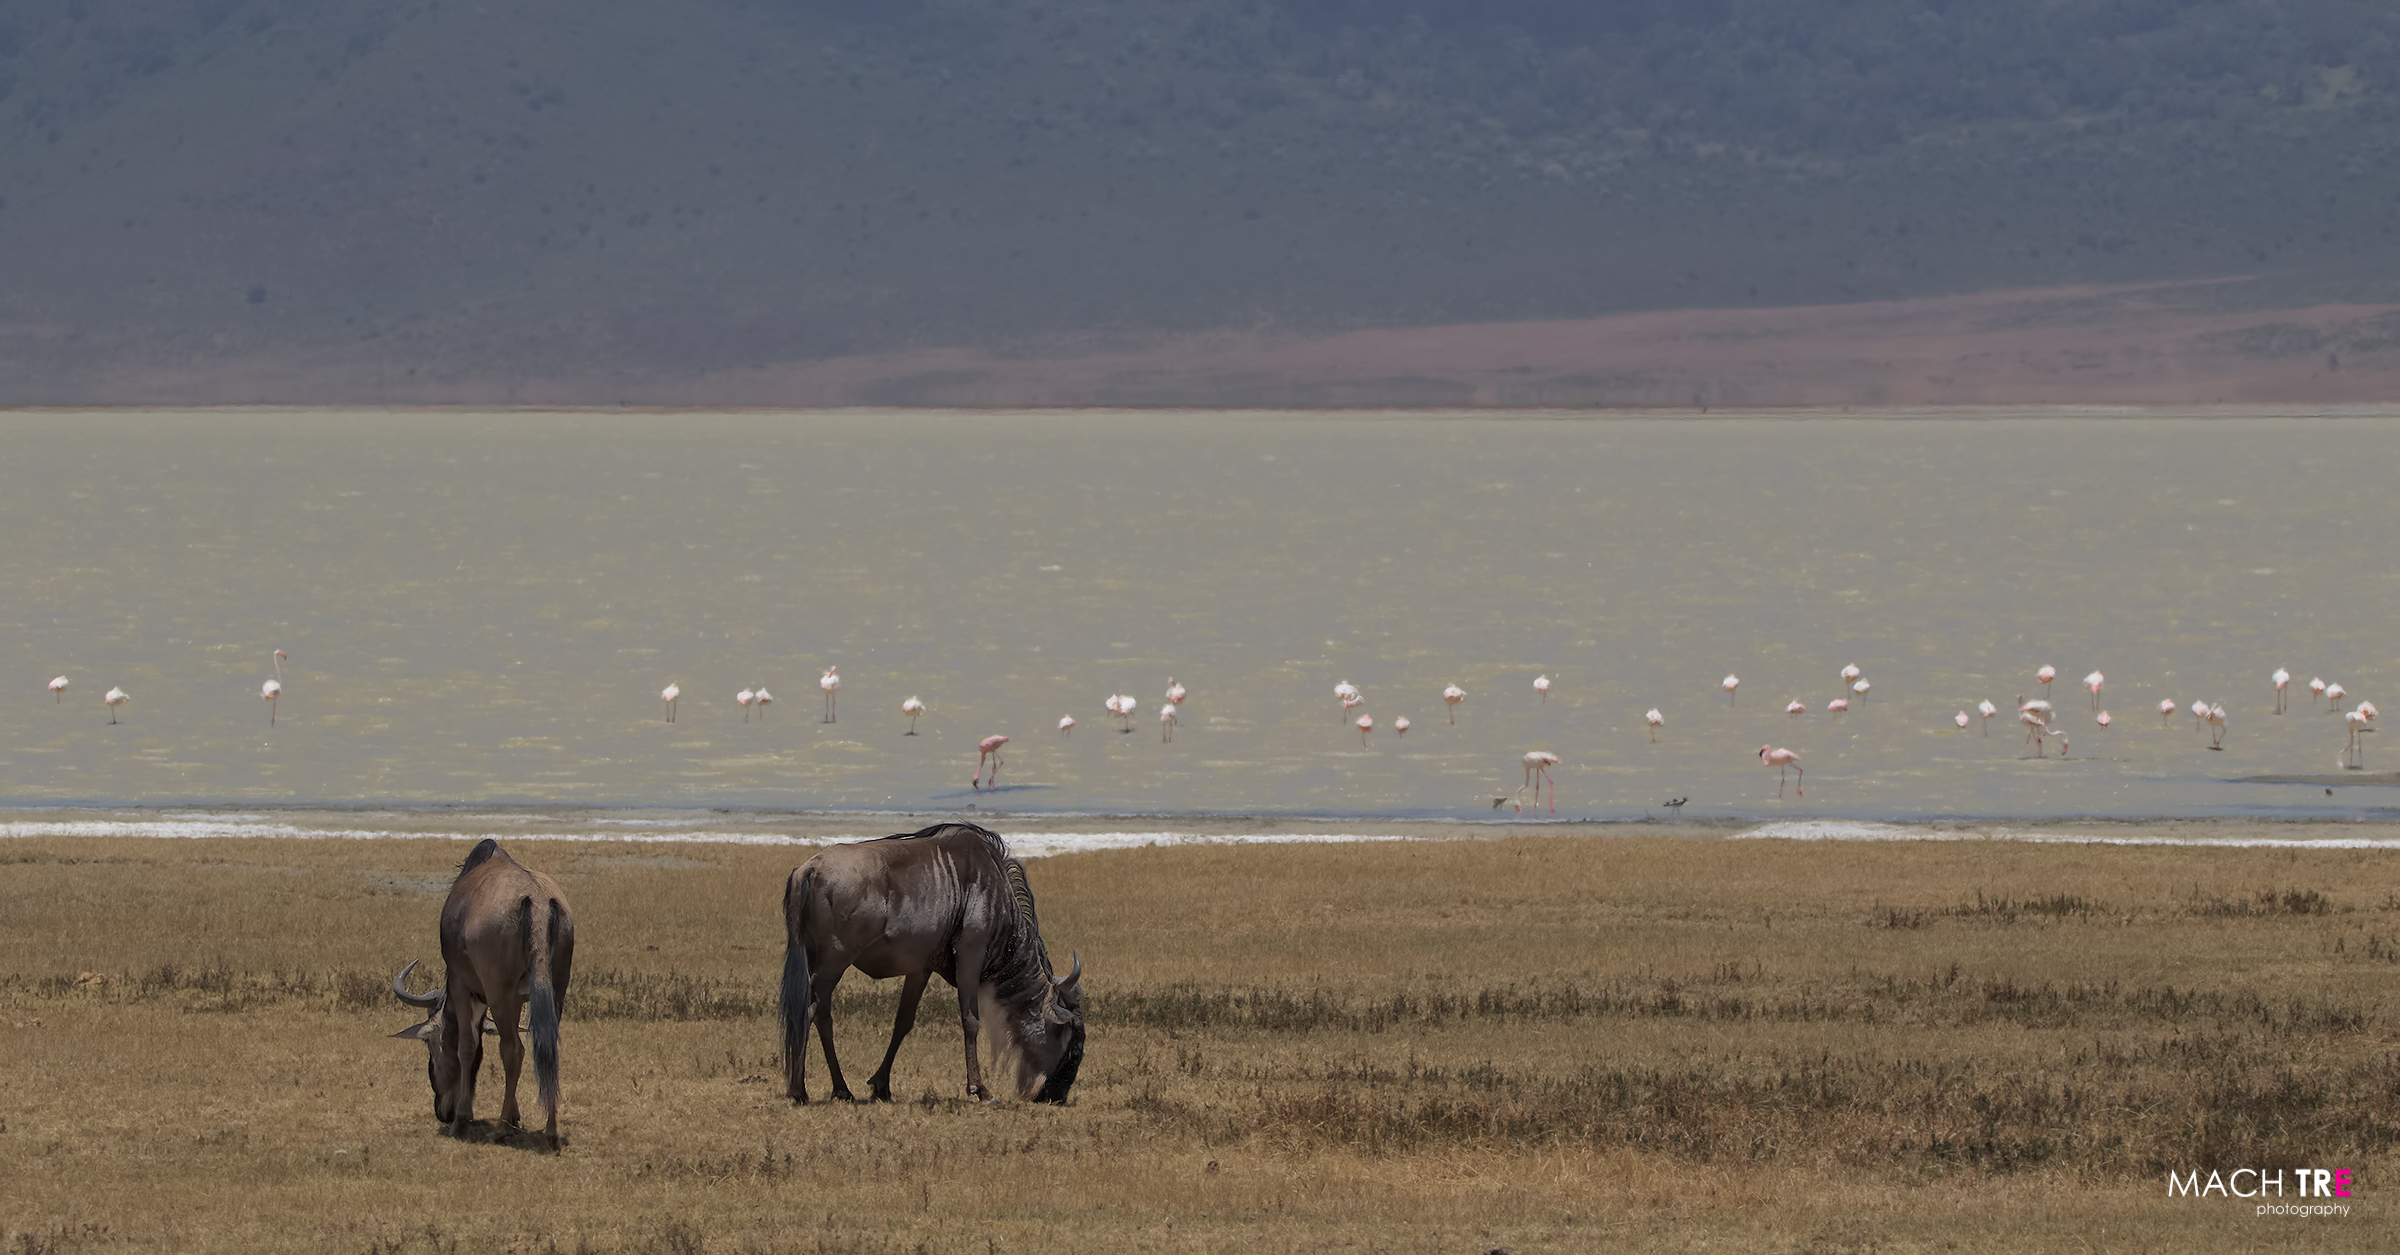 Ngorongoro...